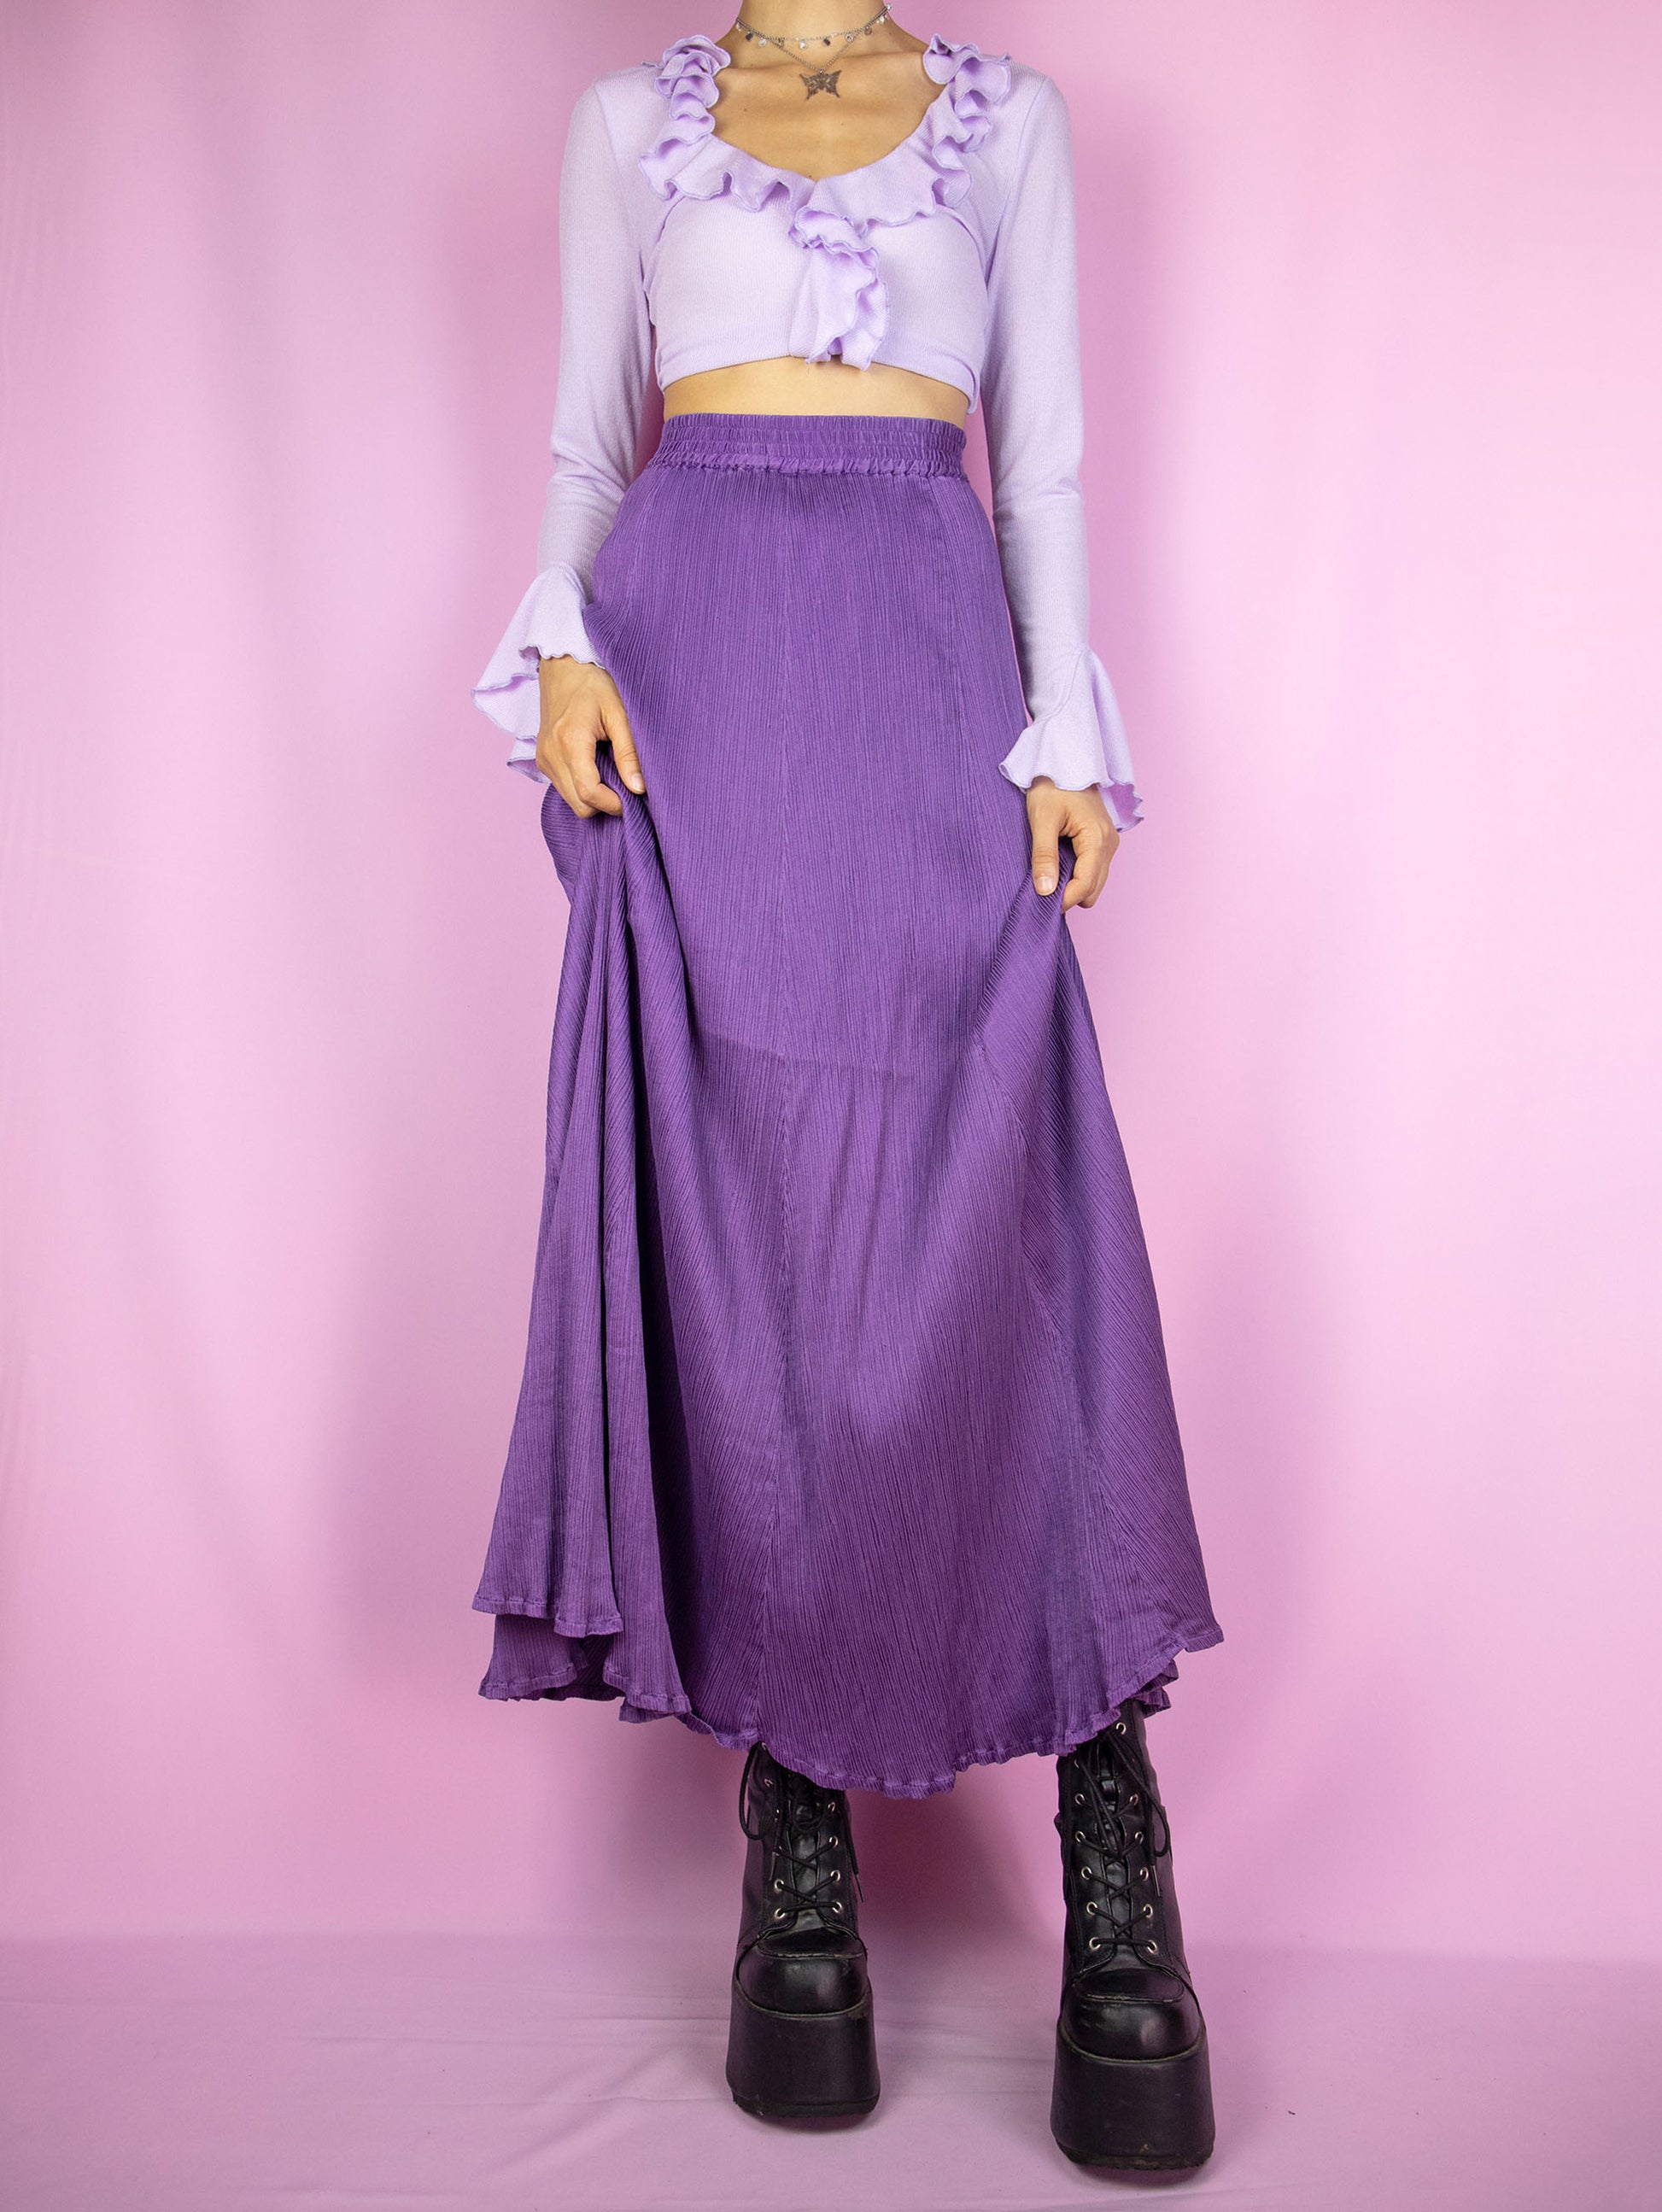 The Vintage 90s Purple Pleated Maxi Skirt is a flared pleated purple skirt with an elasticated waist. Gorgeous elegant boho 1990s midi skirt.